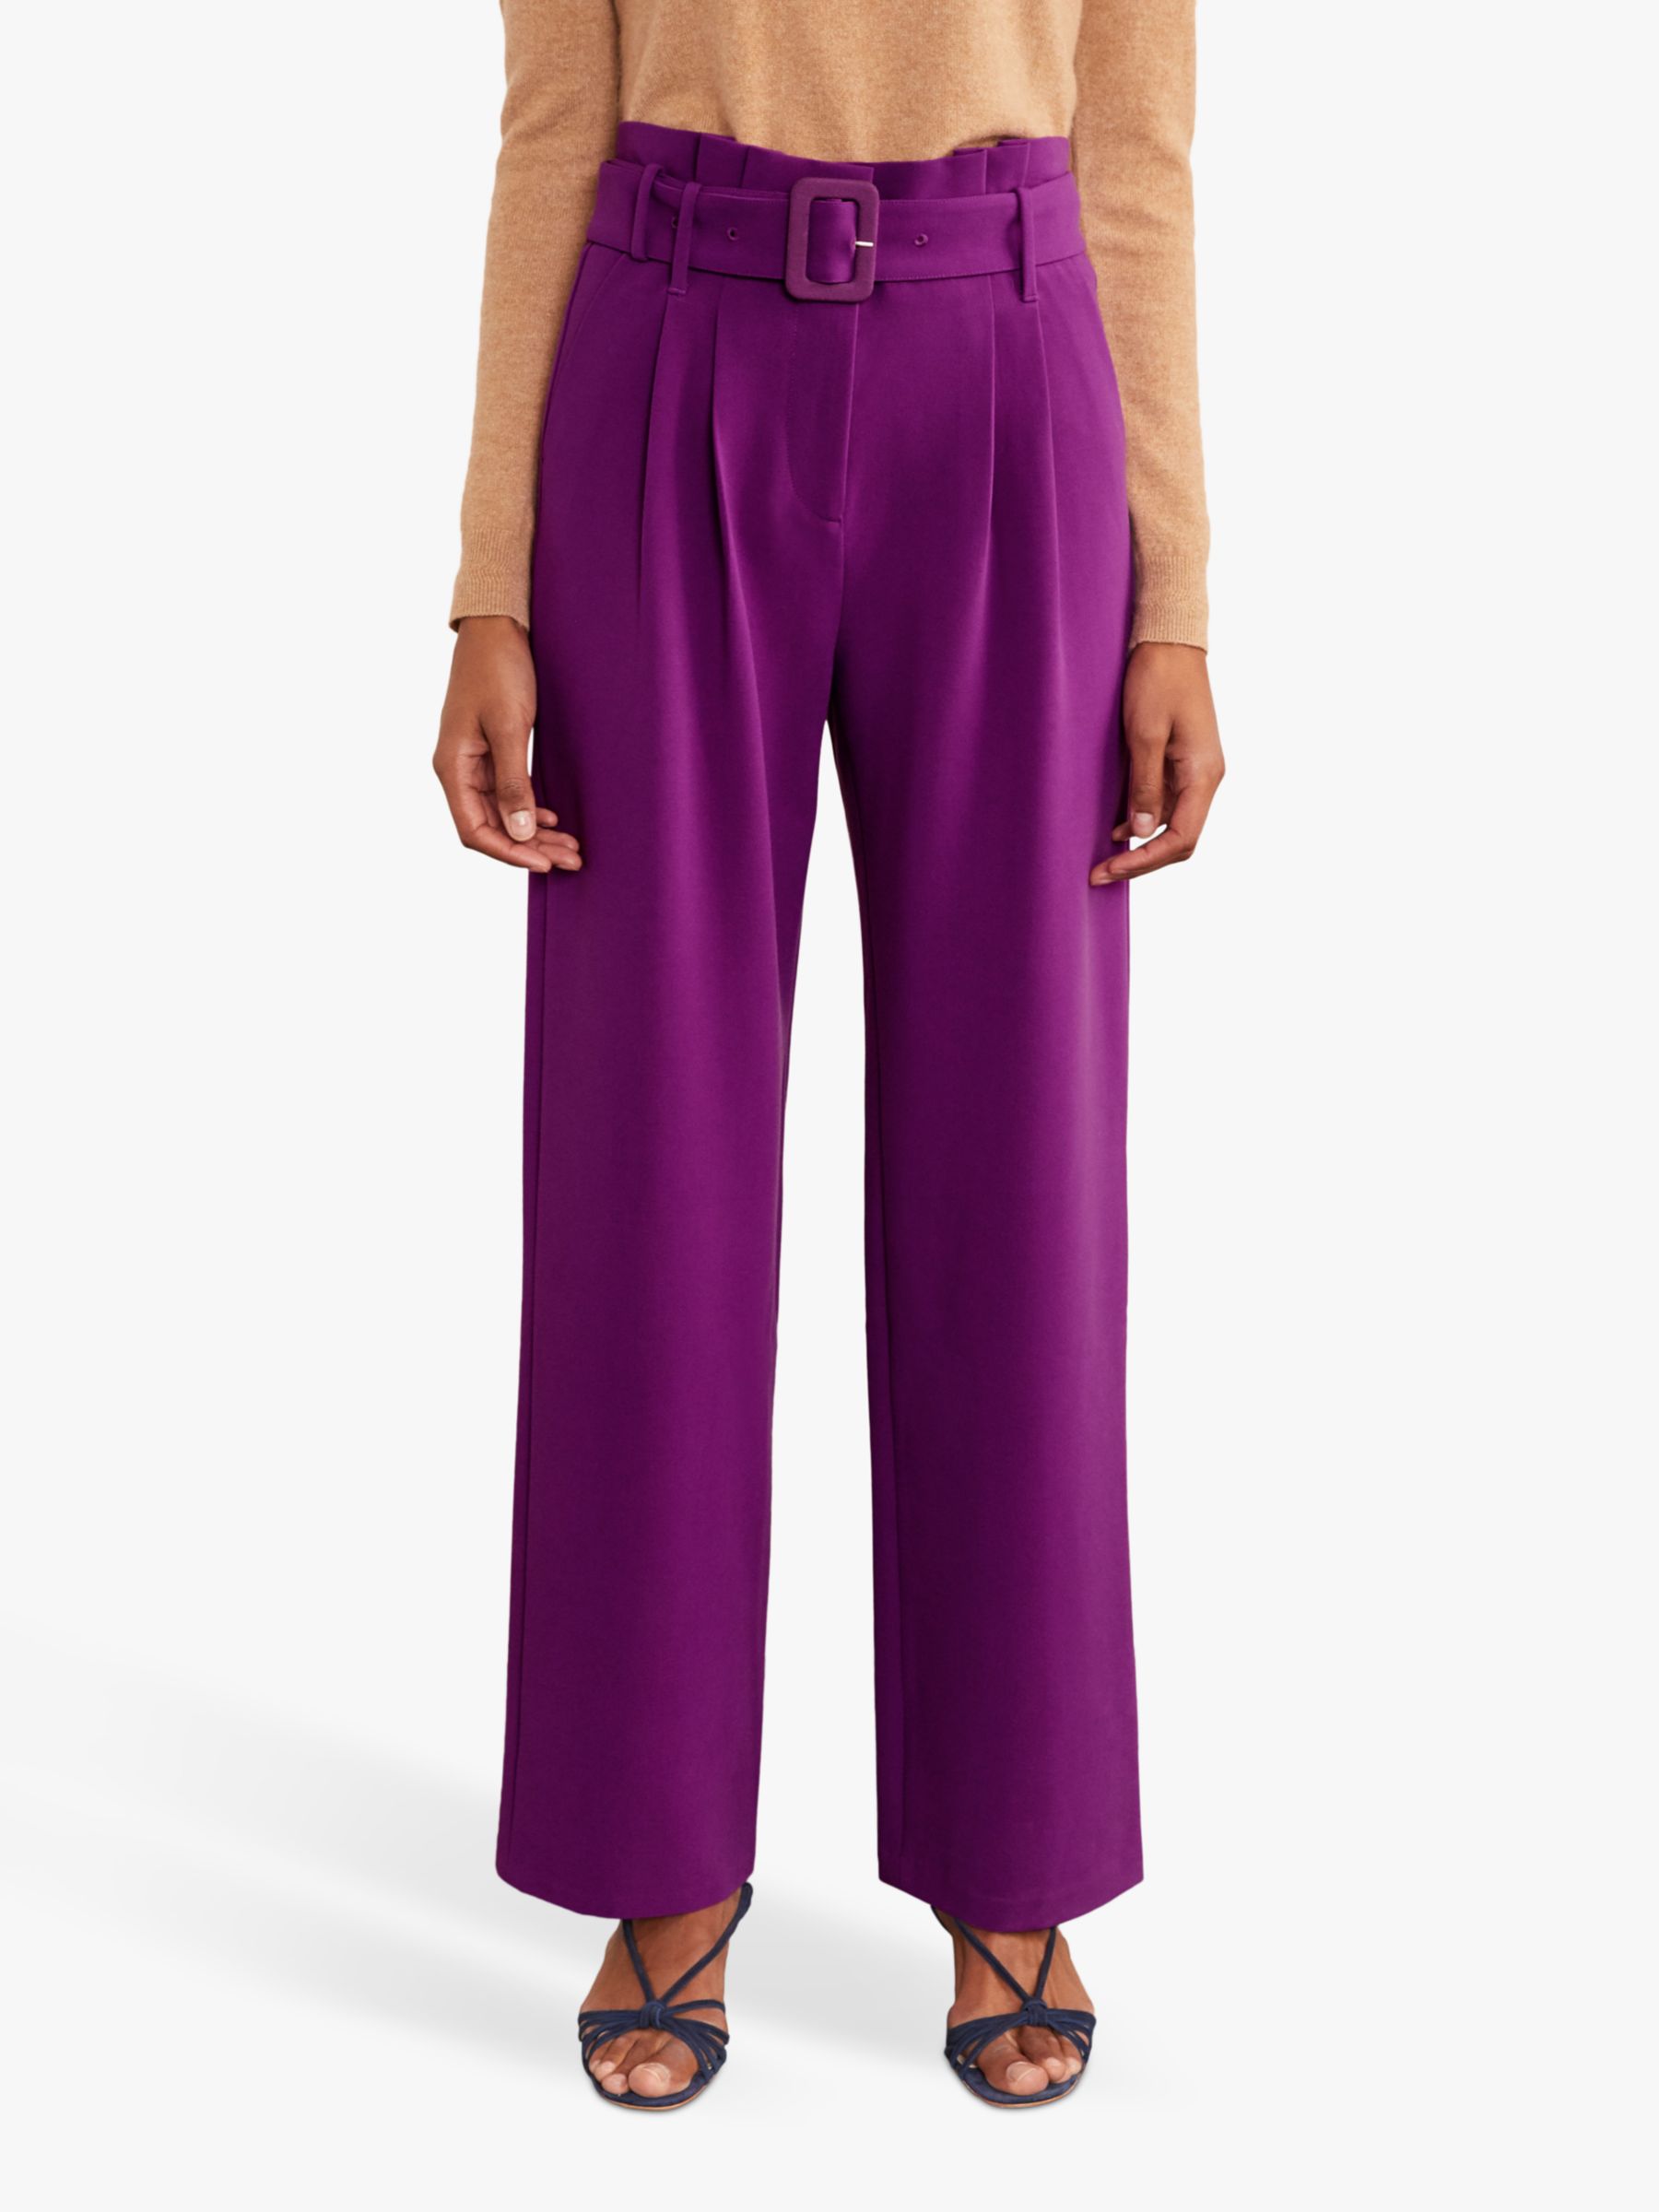 Boden Powis Wide Leg Trousers, Jewel Purple at John Lewis & Partners